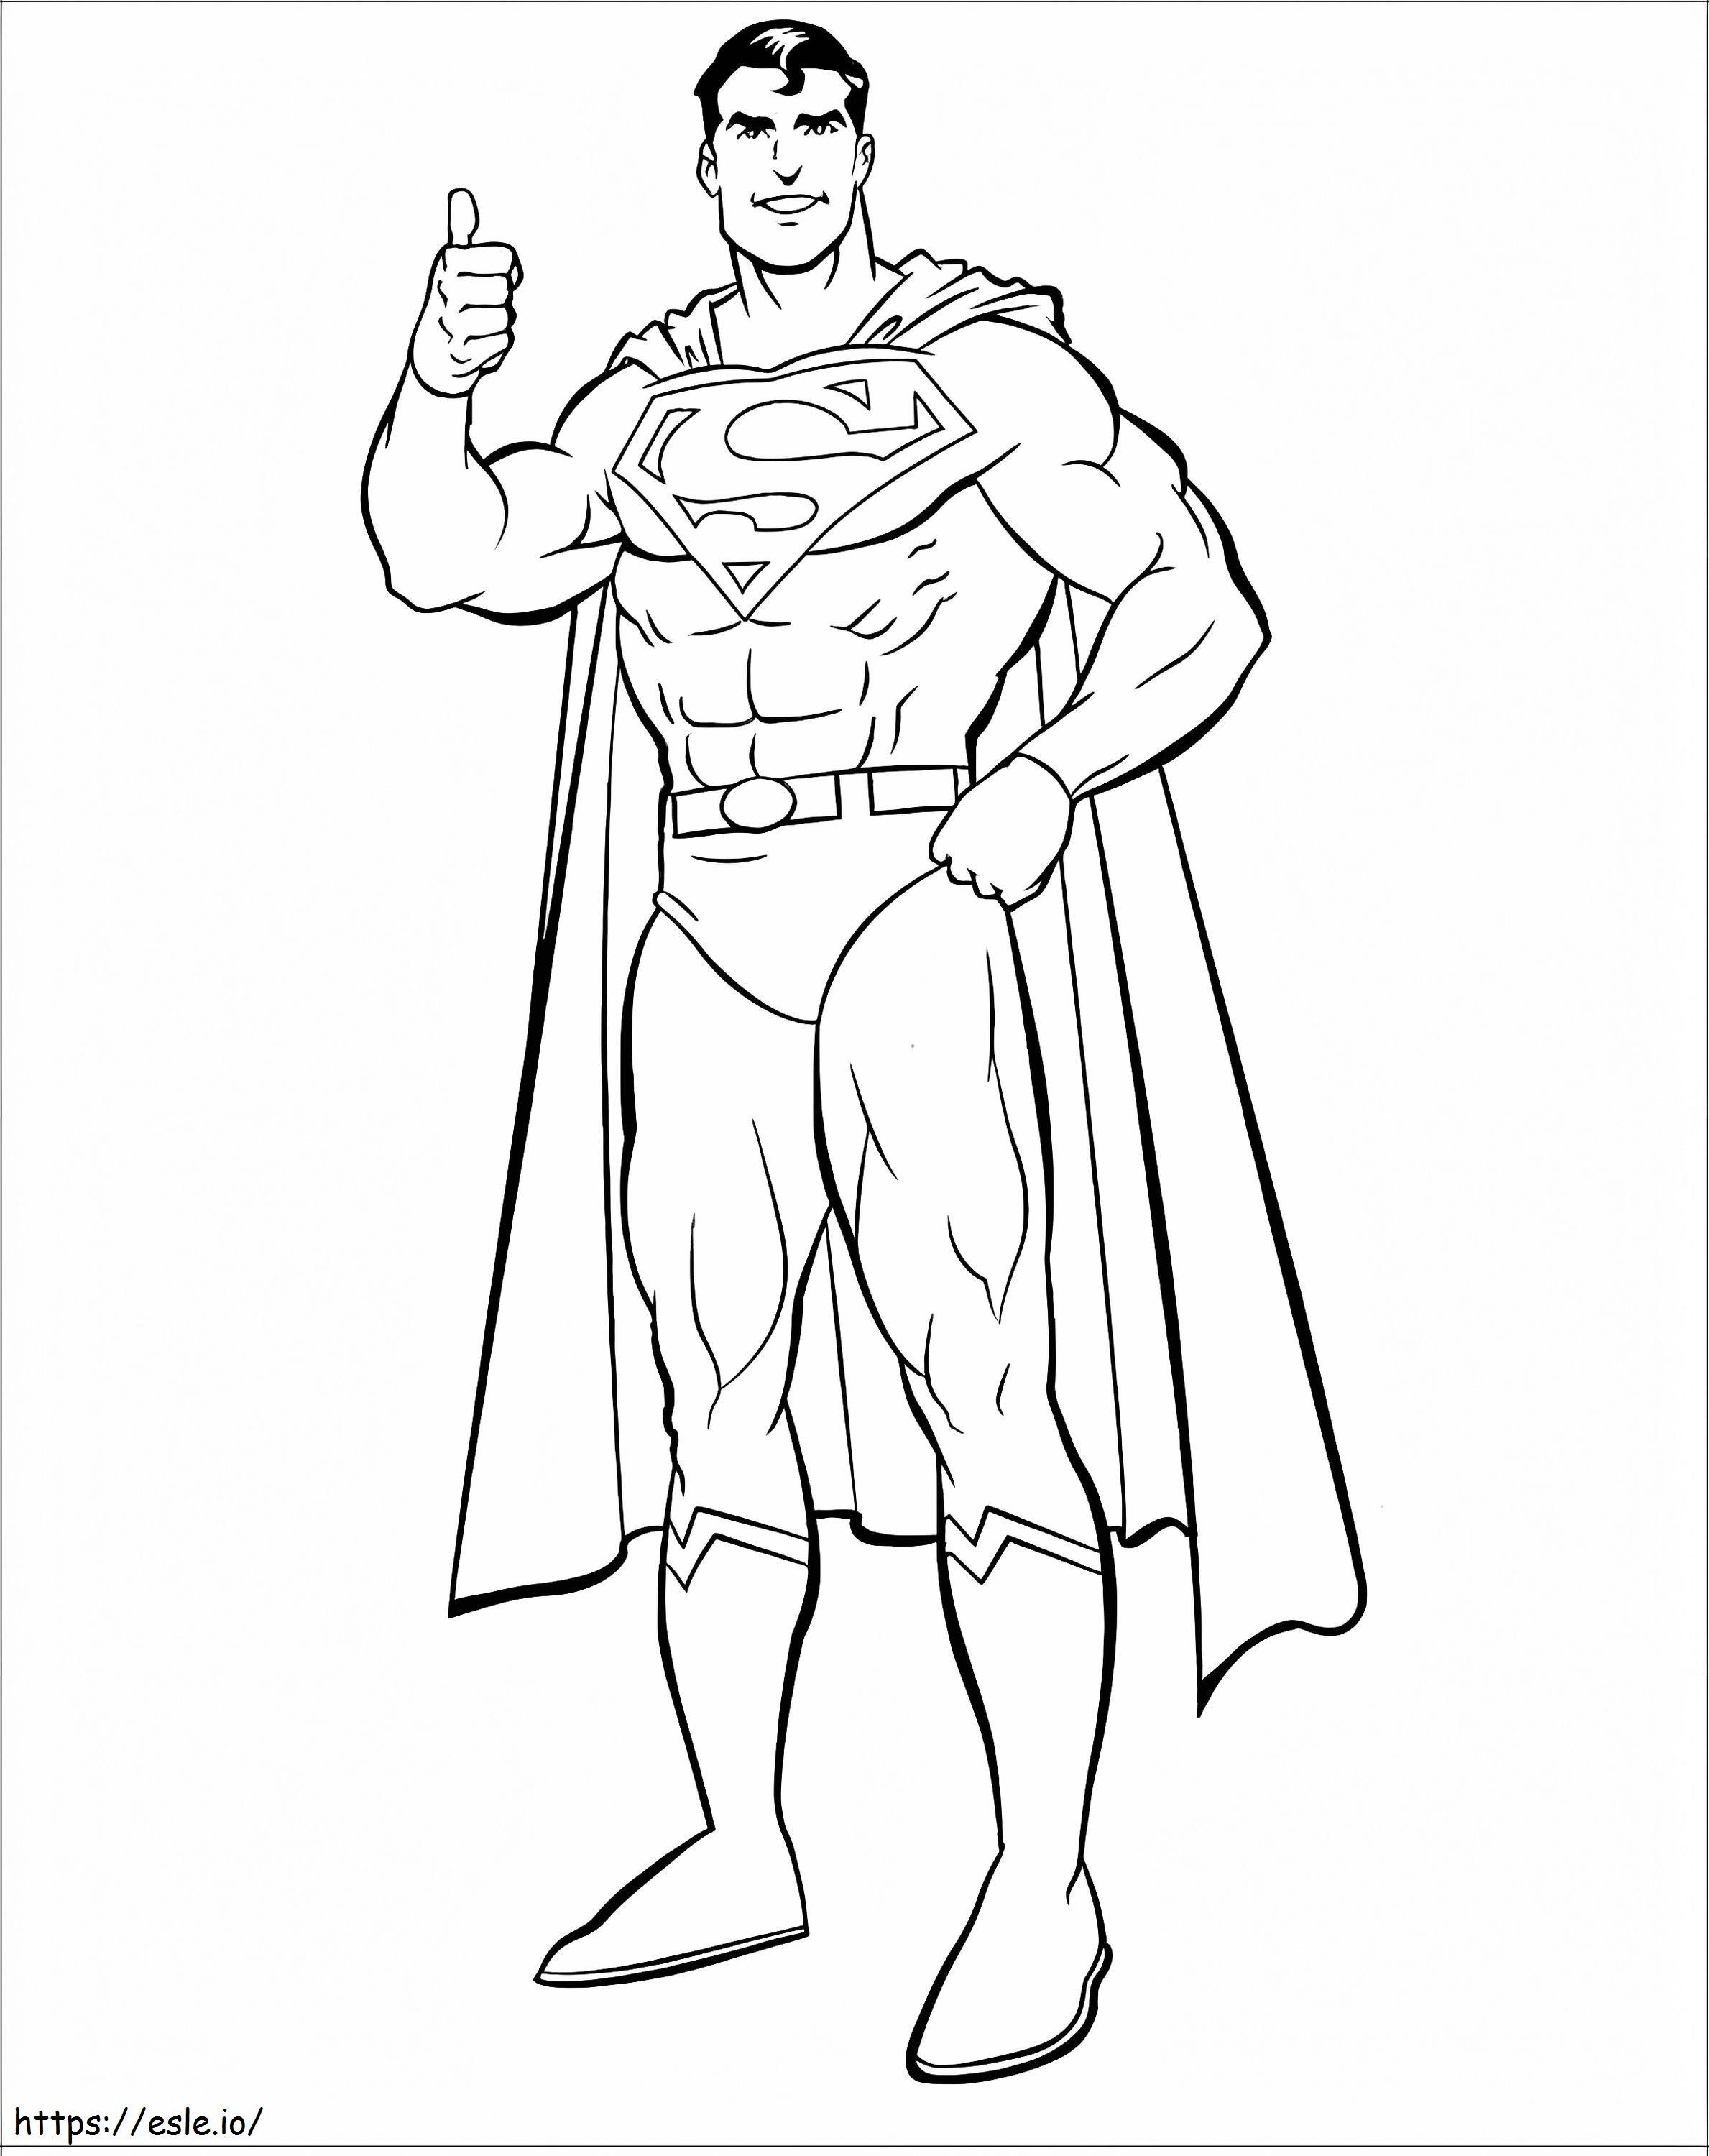 Lustiger Superman ausmalbilder